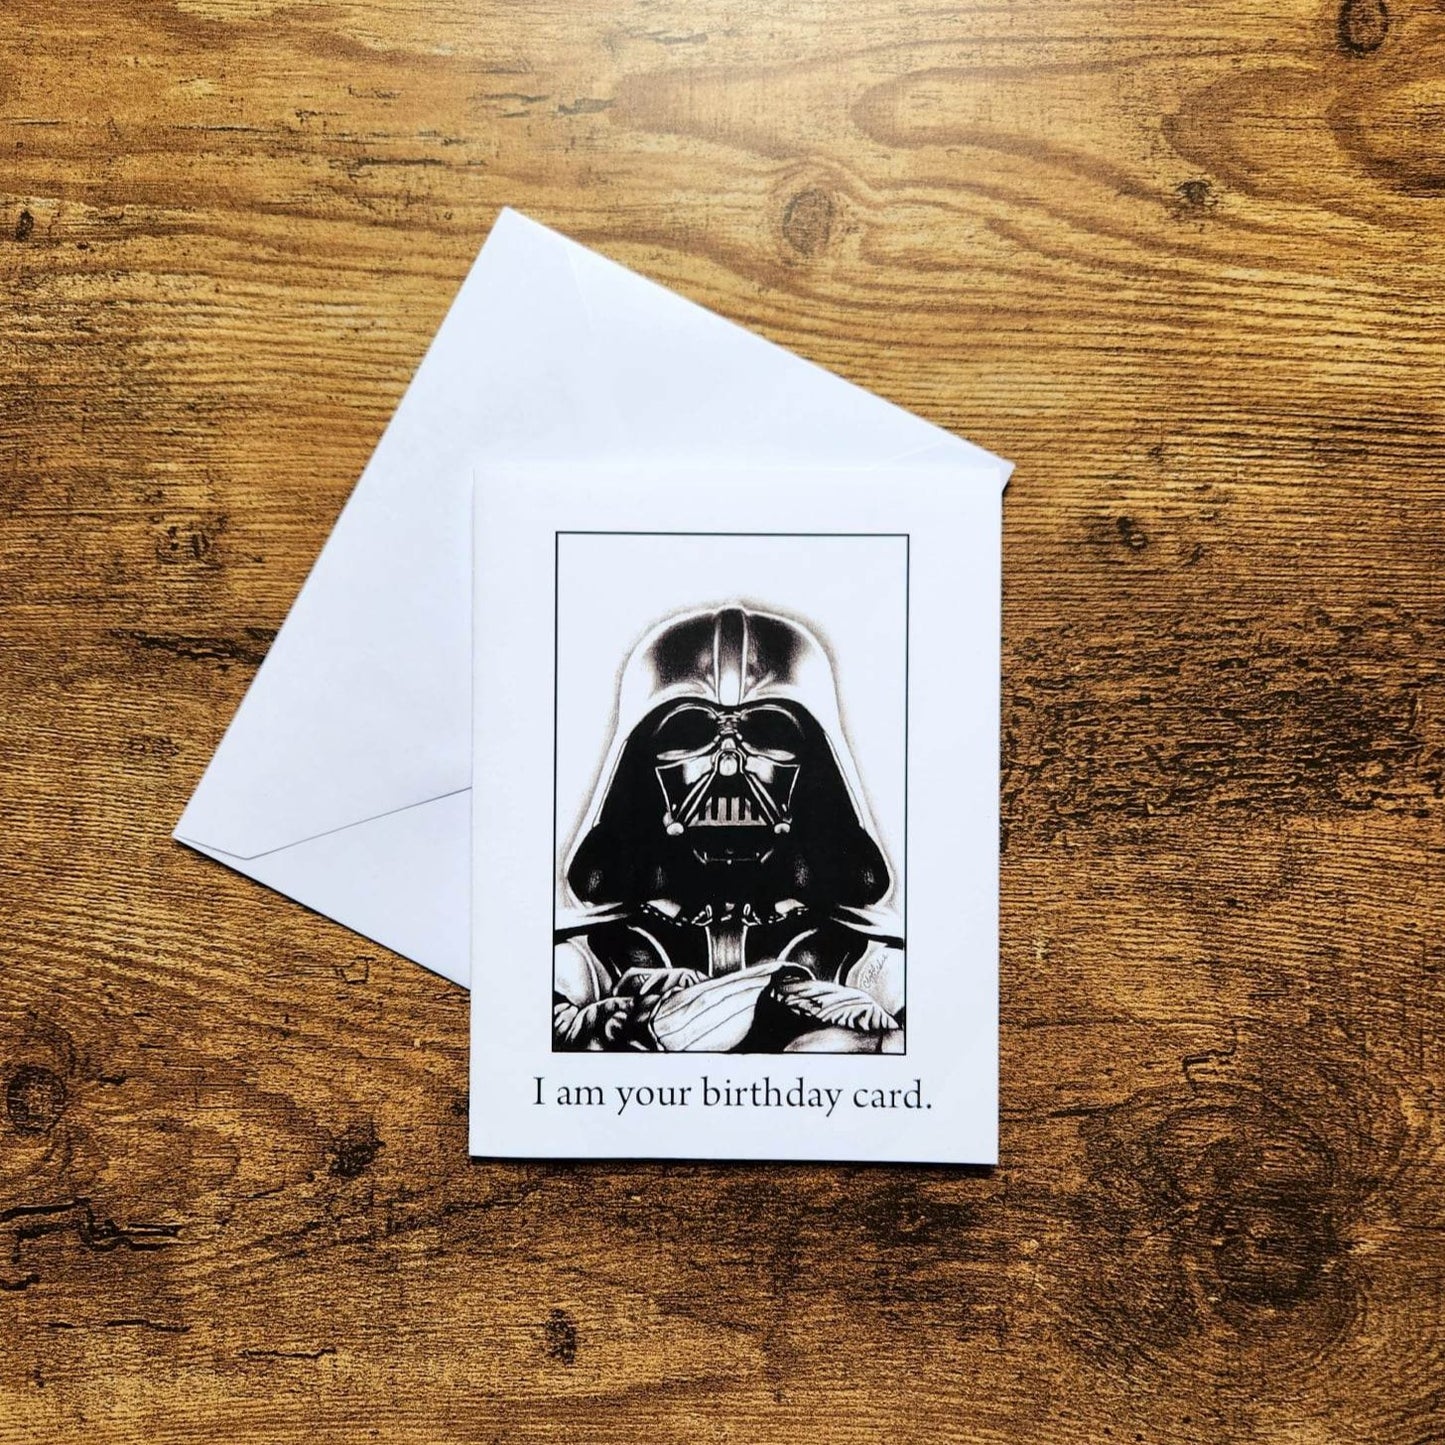 I am your birthday card, Funny nerdy Vader Birthday card, Birthday card for sci-fi fans, Card for Nerd boyfriend, girlfriend, Nerd Husband